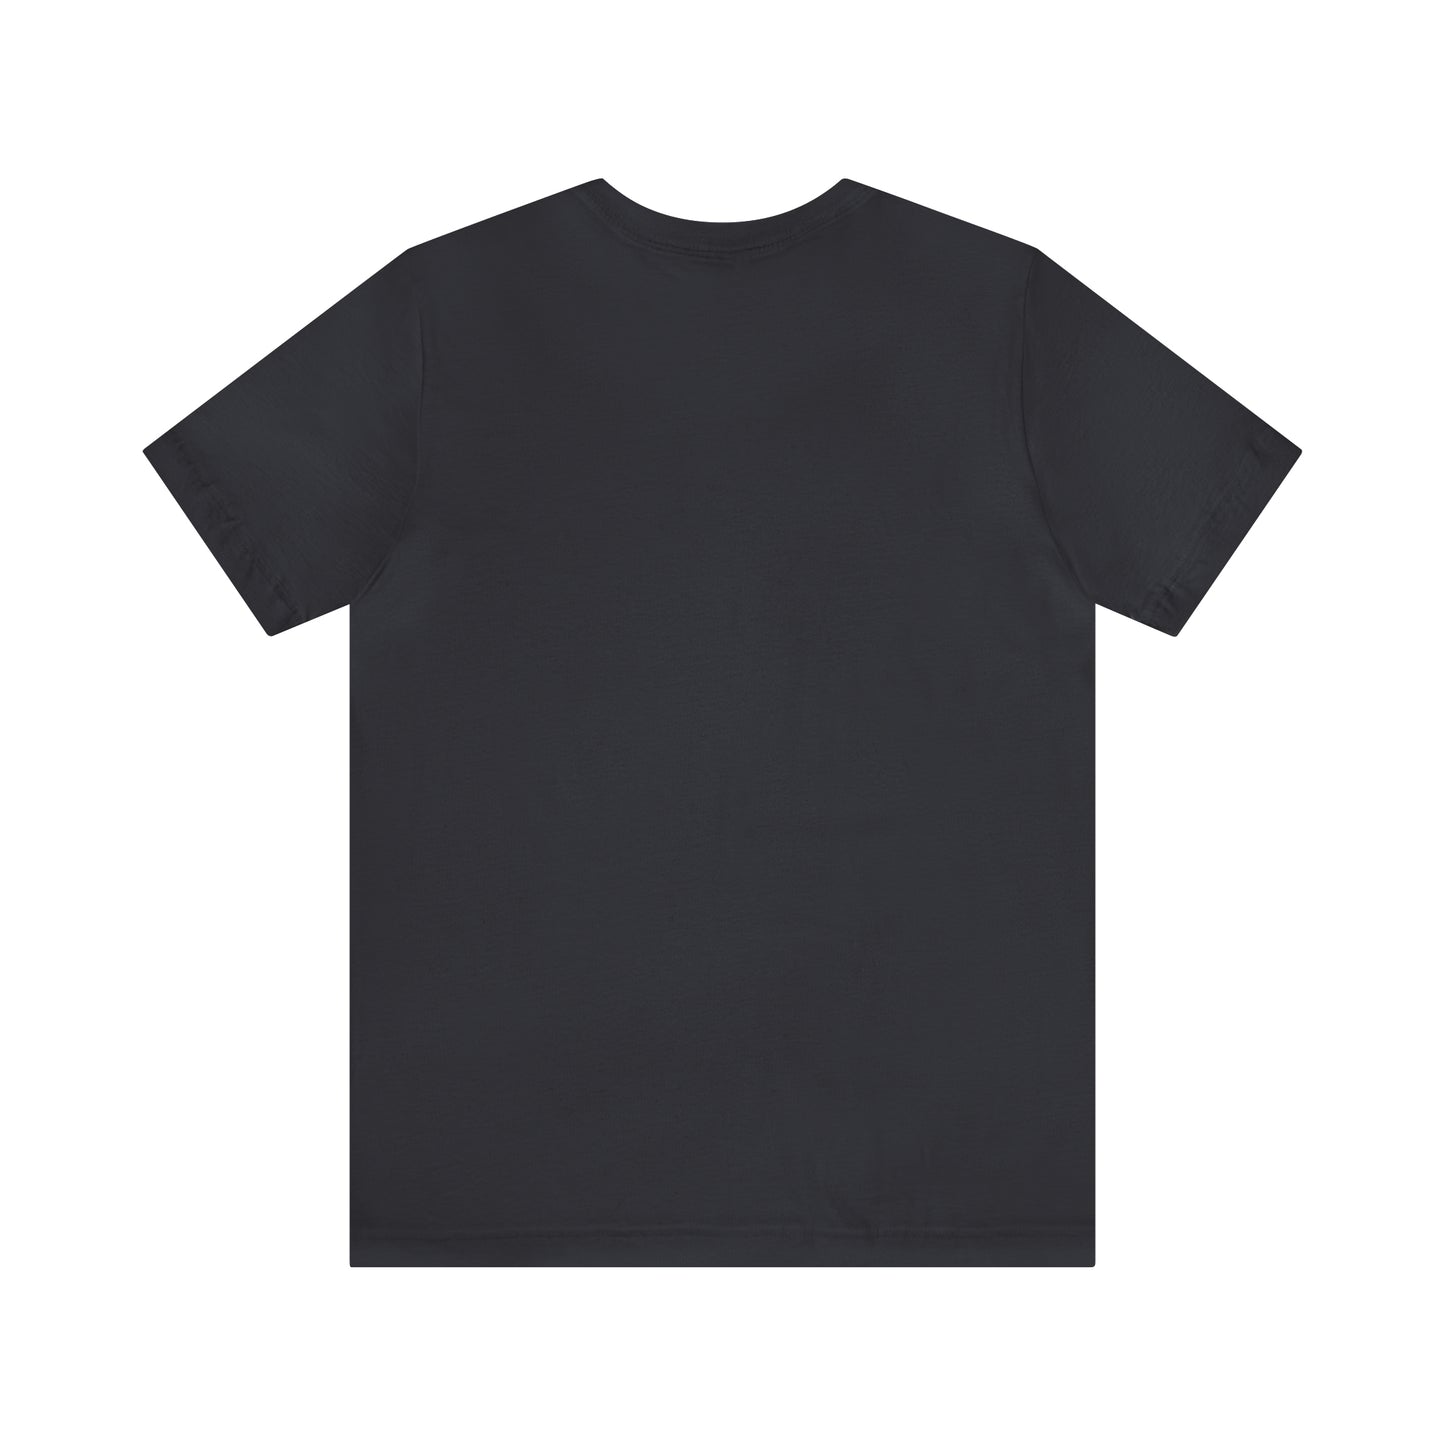 Friendship T-Shirt | Squad Tee | Squad Goals T-Shirt Petrova Designs